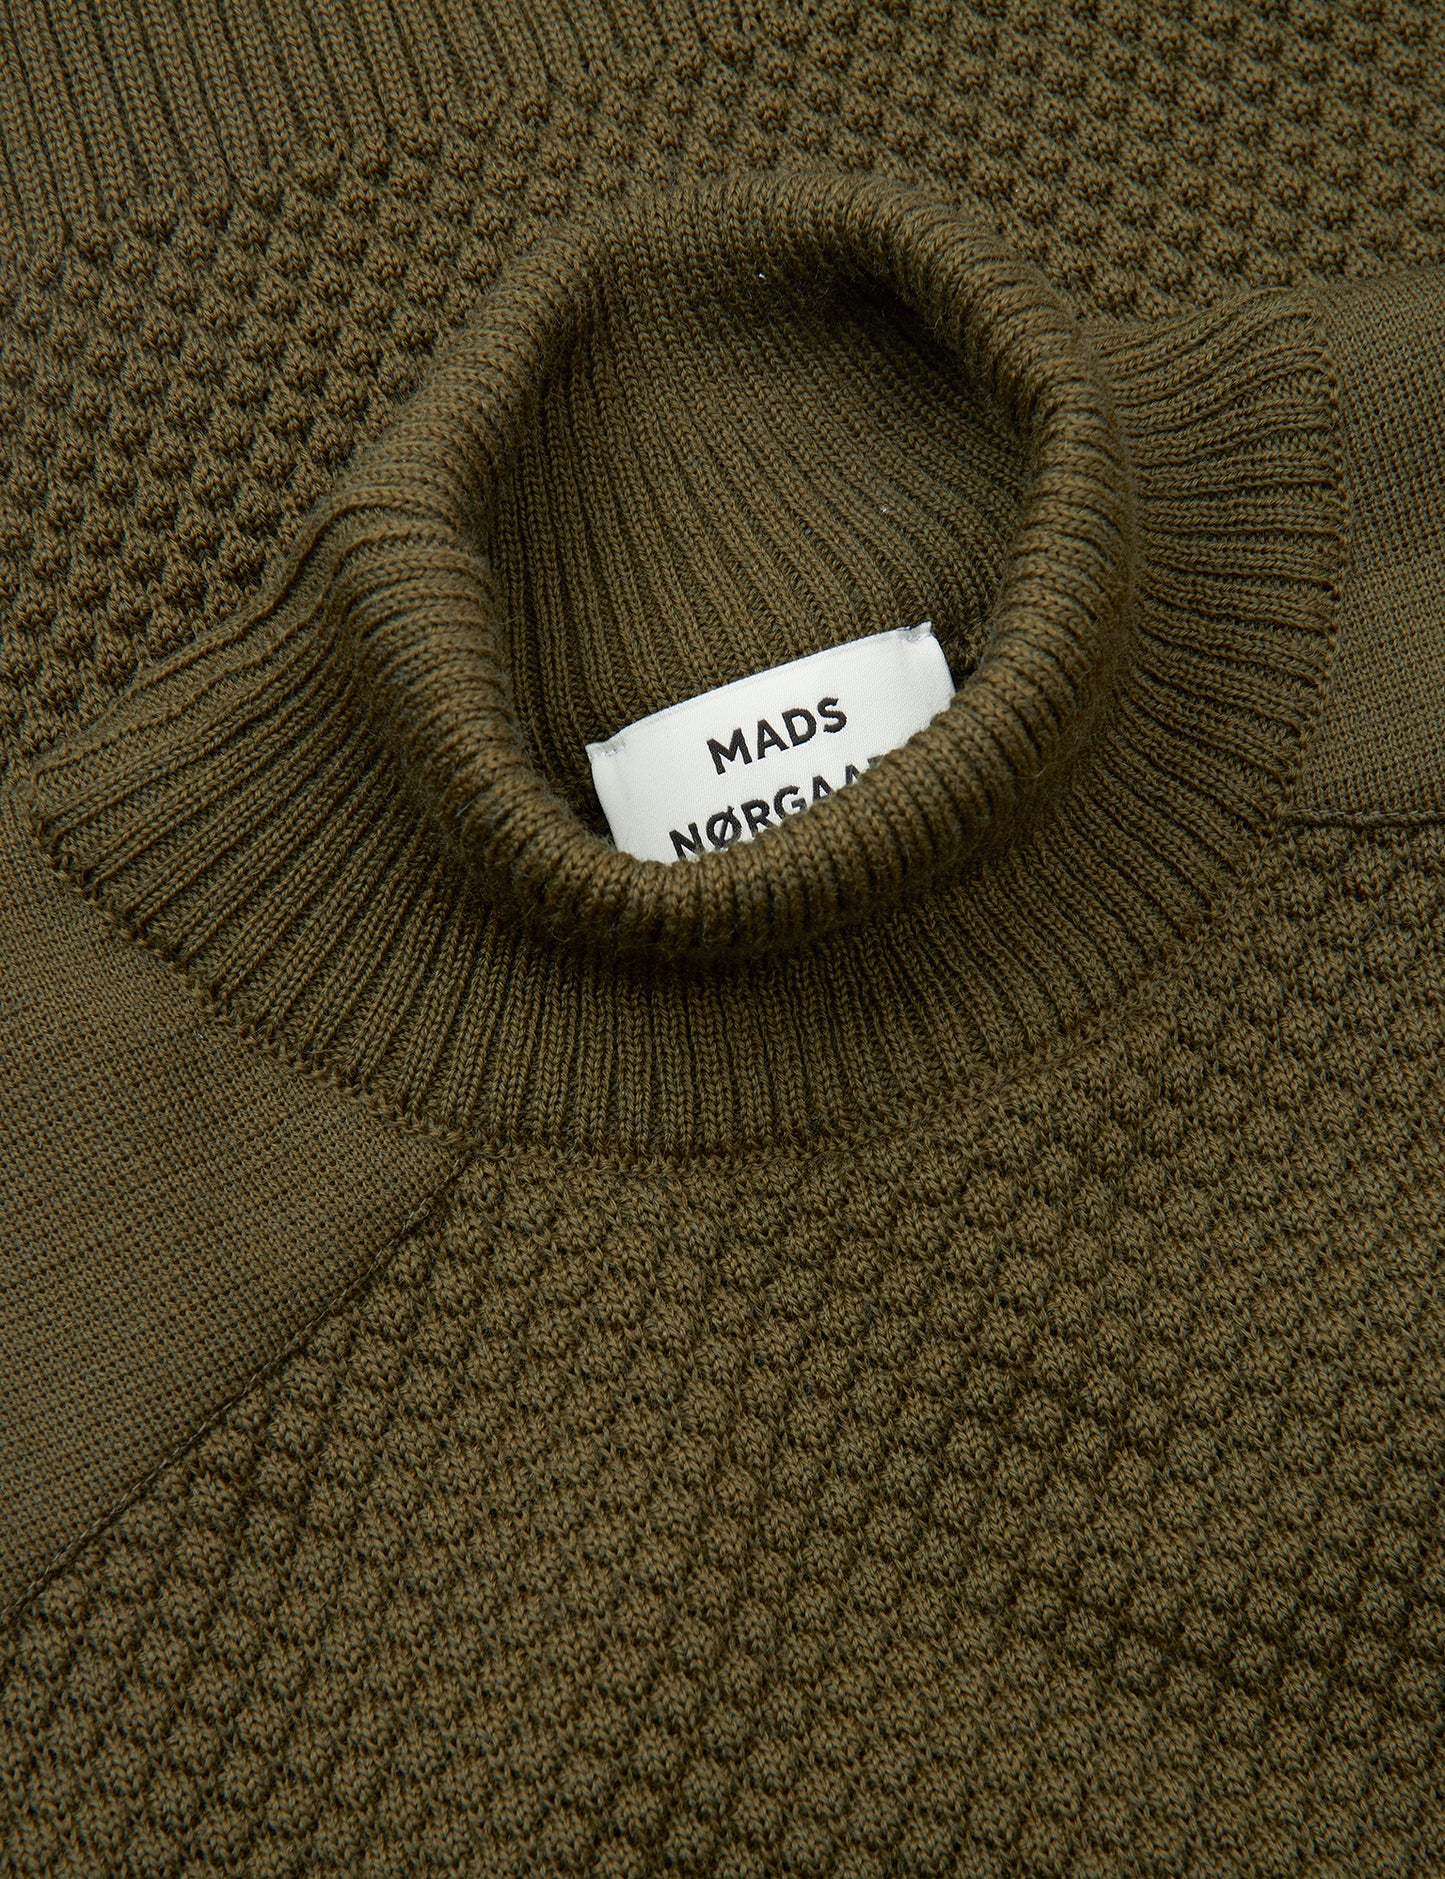 New Wool Clam Sweater, Beech